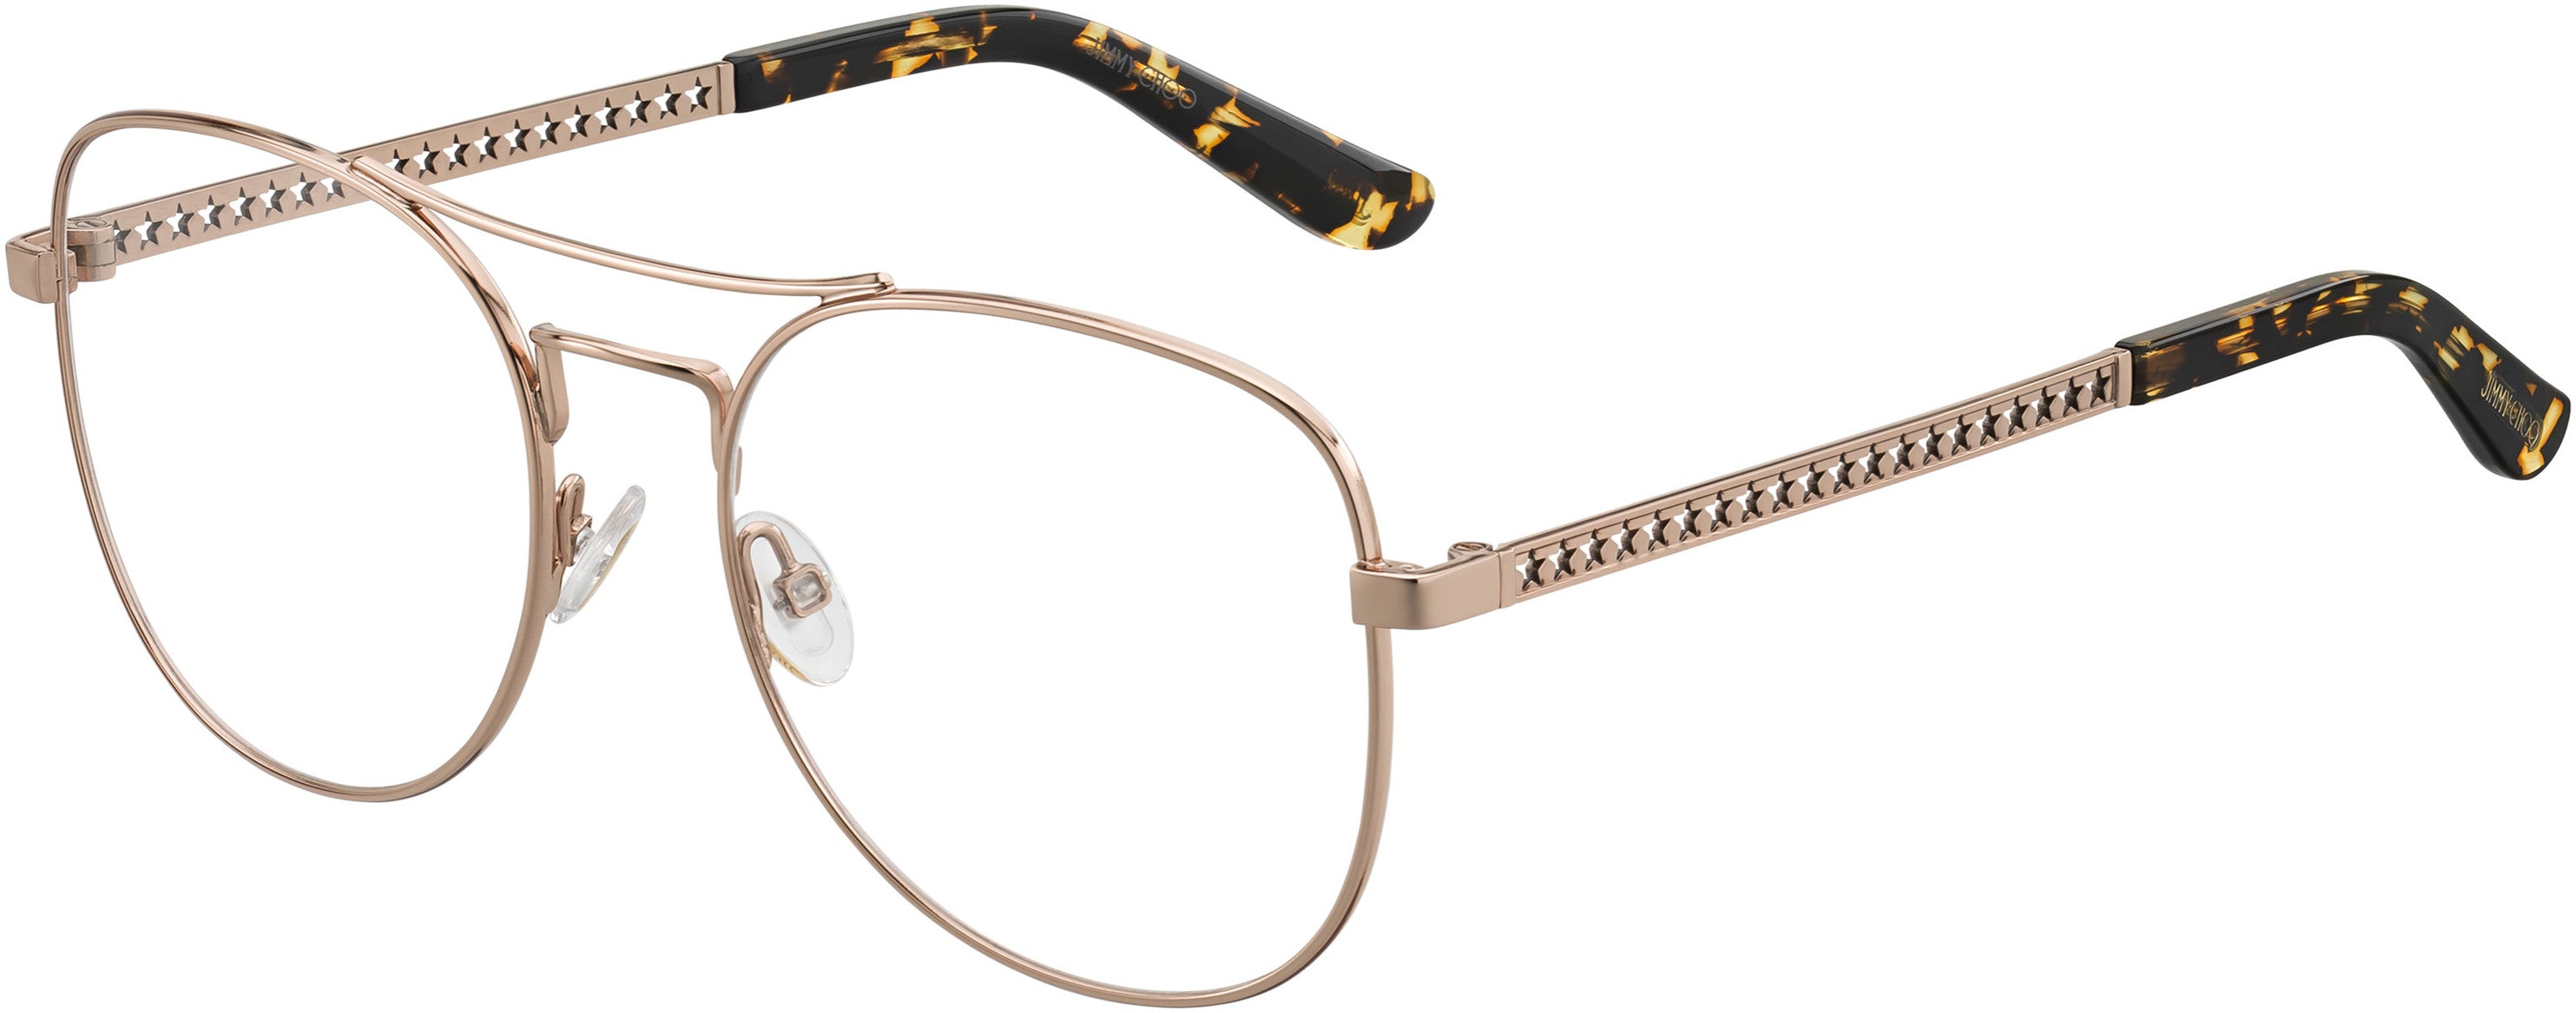  Jimmy Choo 200 Oval Modified Eyeglasses 0J5G-0J5G  Gold (00 Demo Lens)